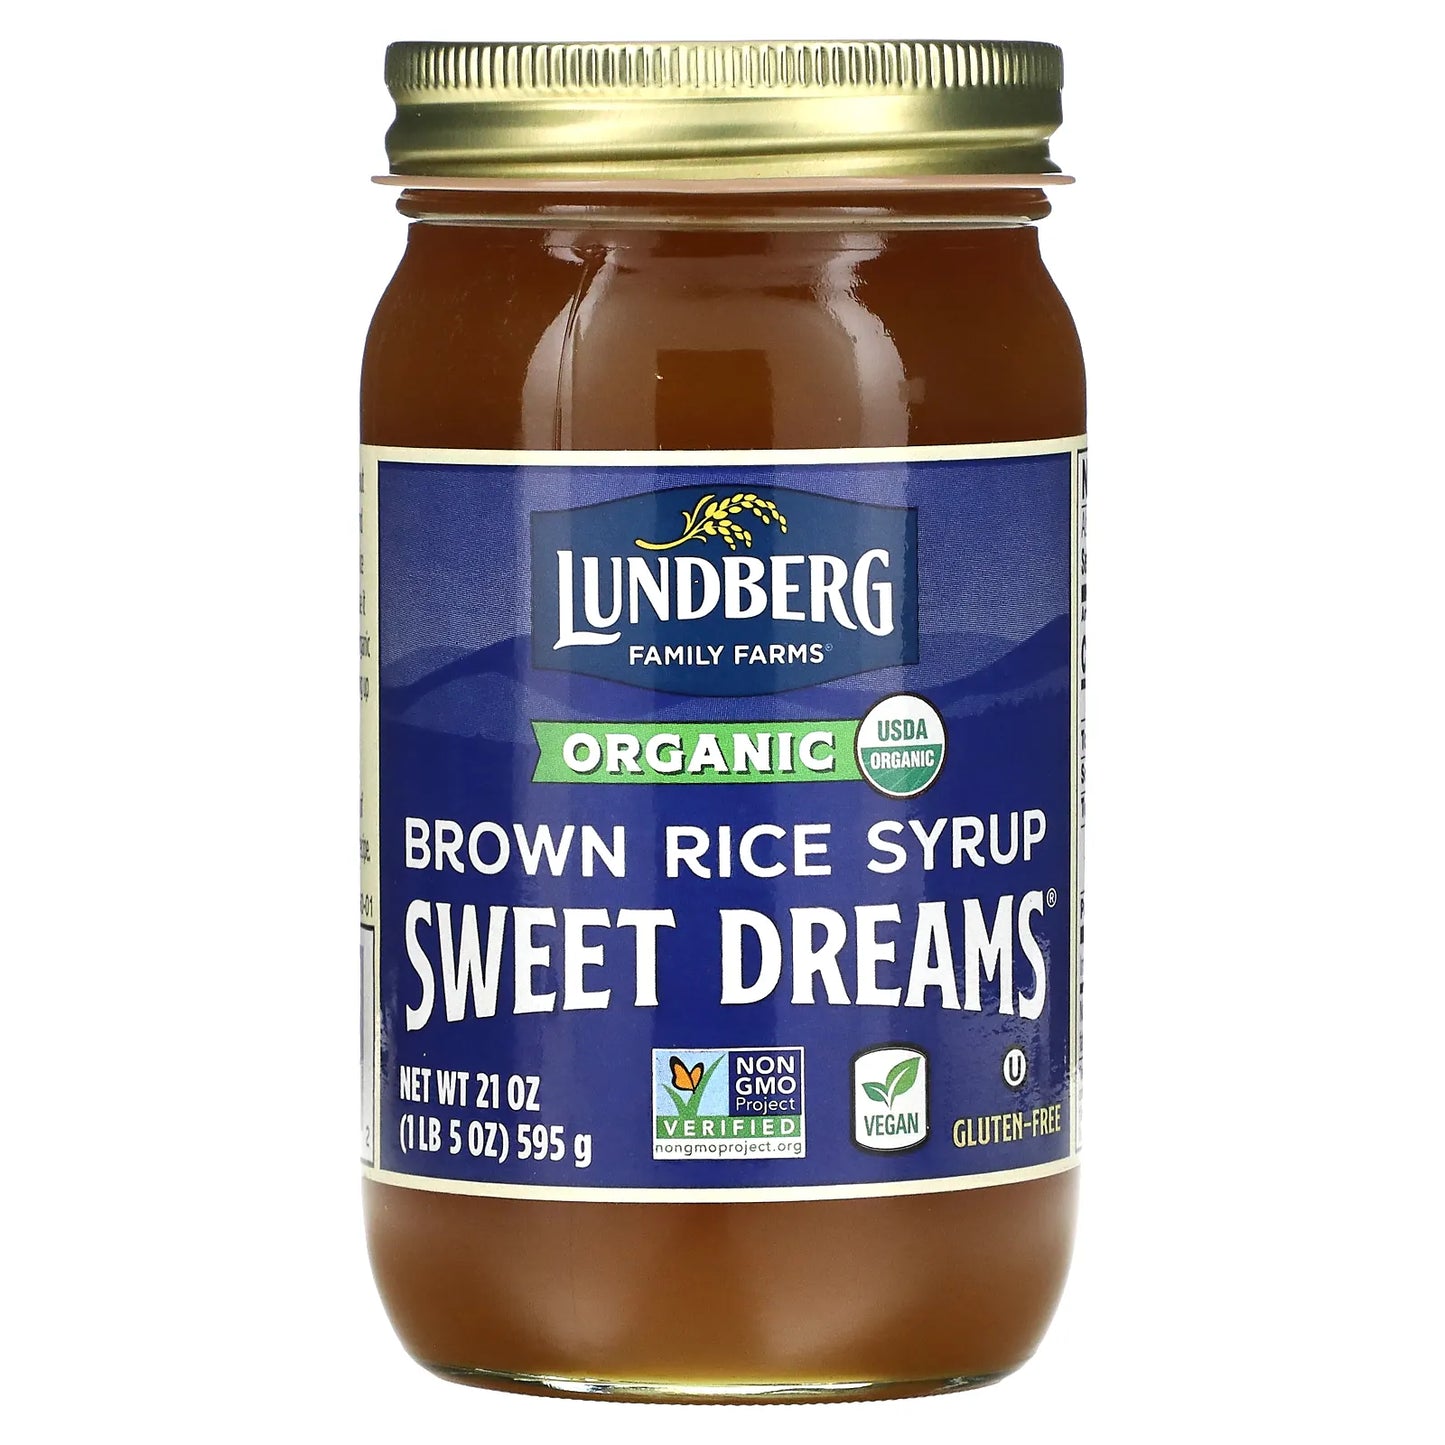 Lundberg Sweet Dreams Organic Brown Rice Syrup